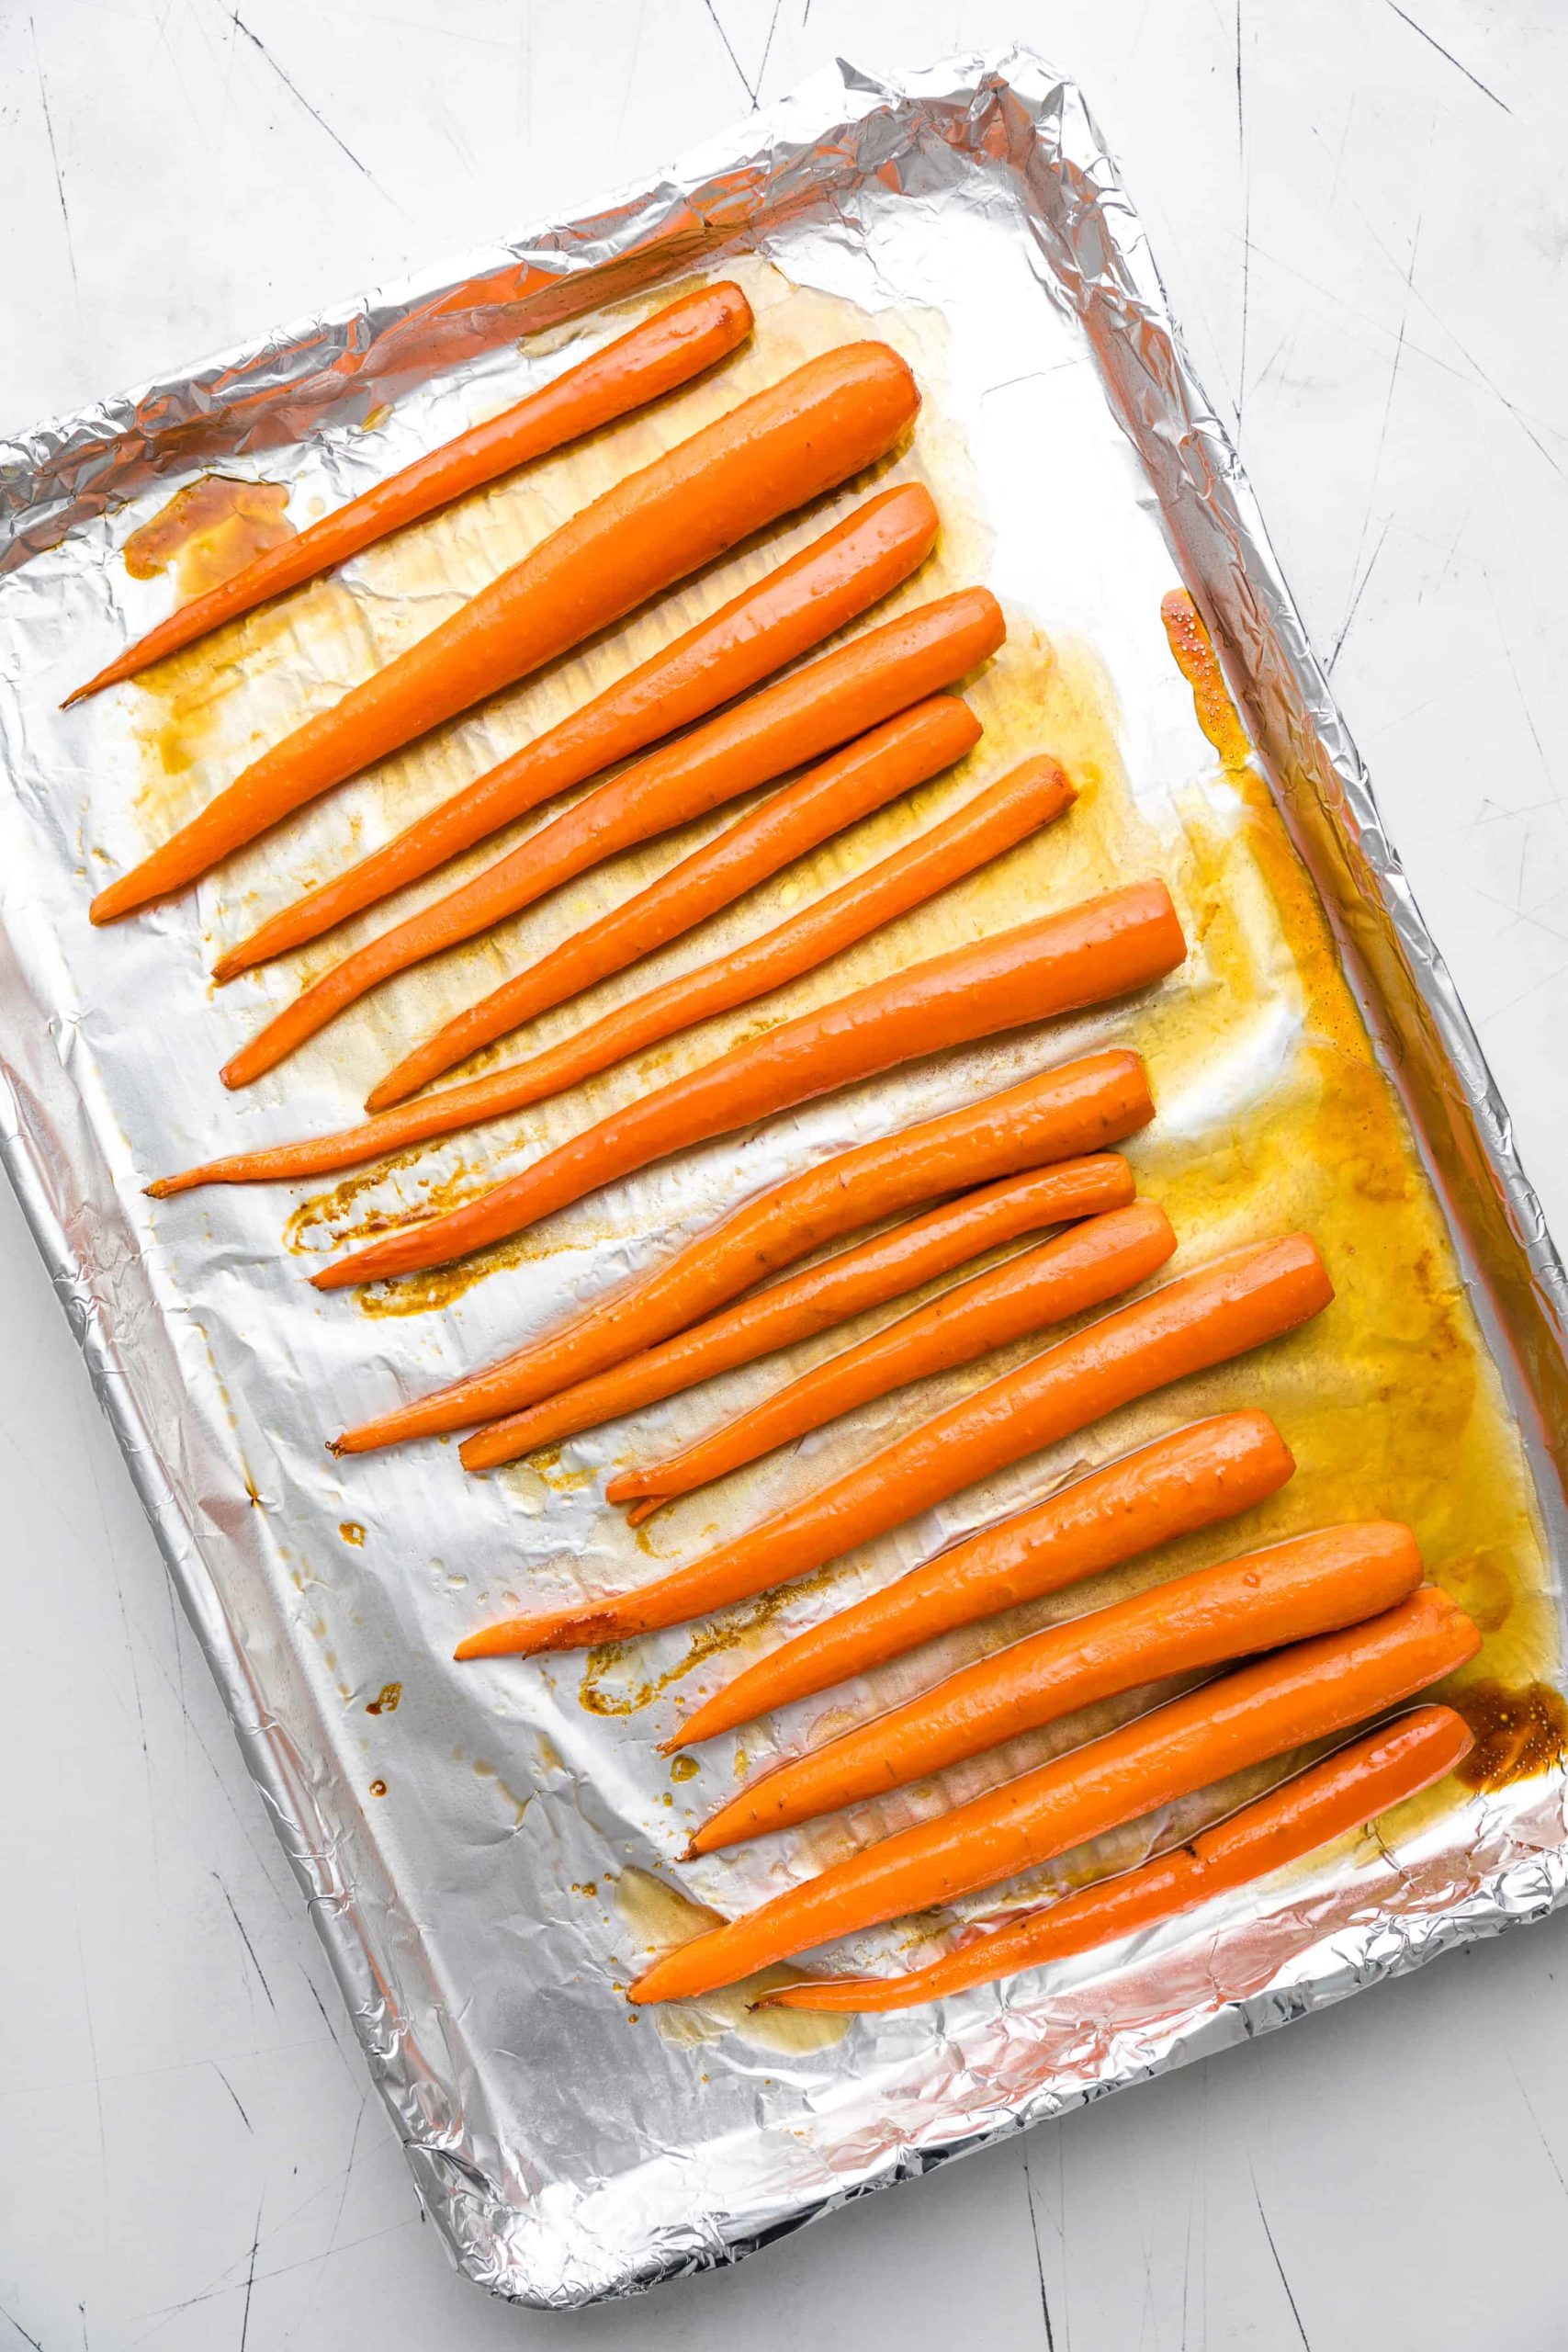 Carrots roasting on a baking sheet.